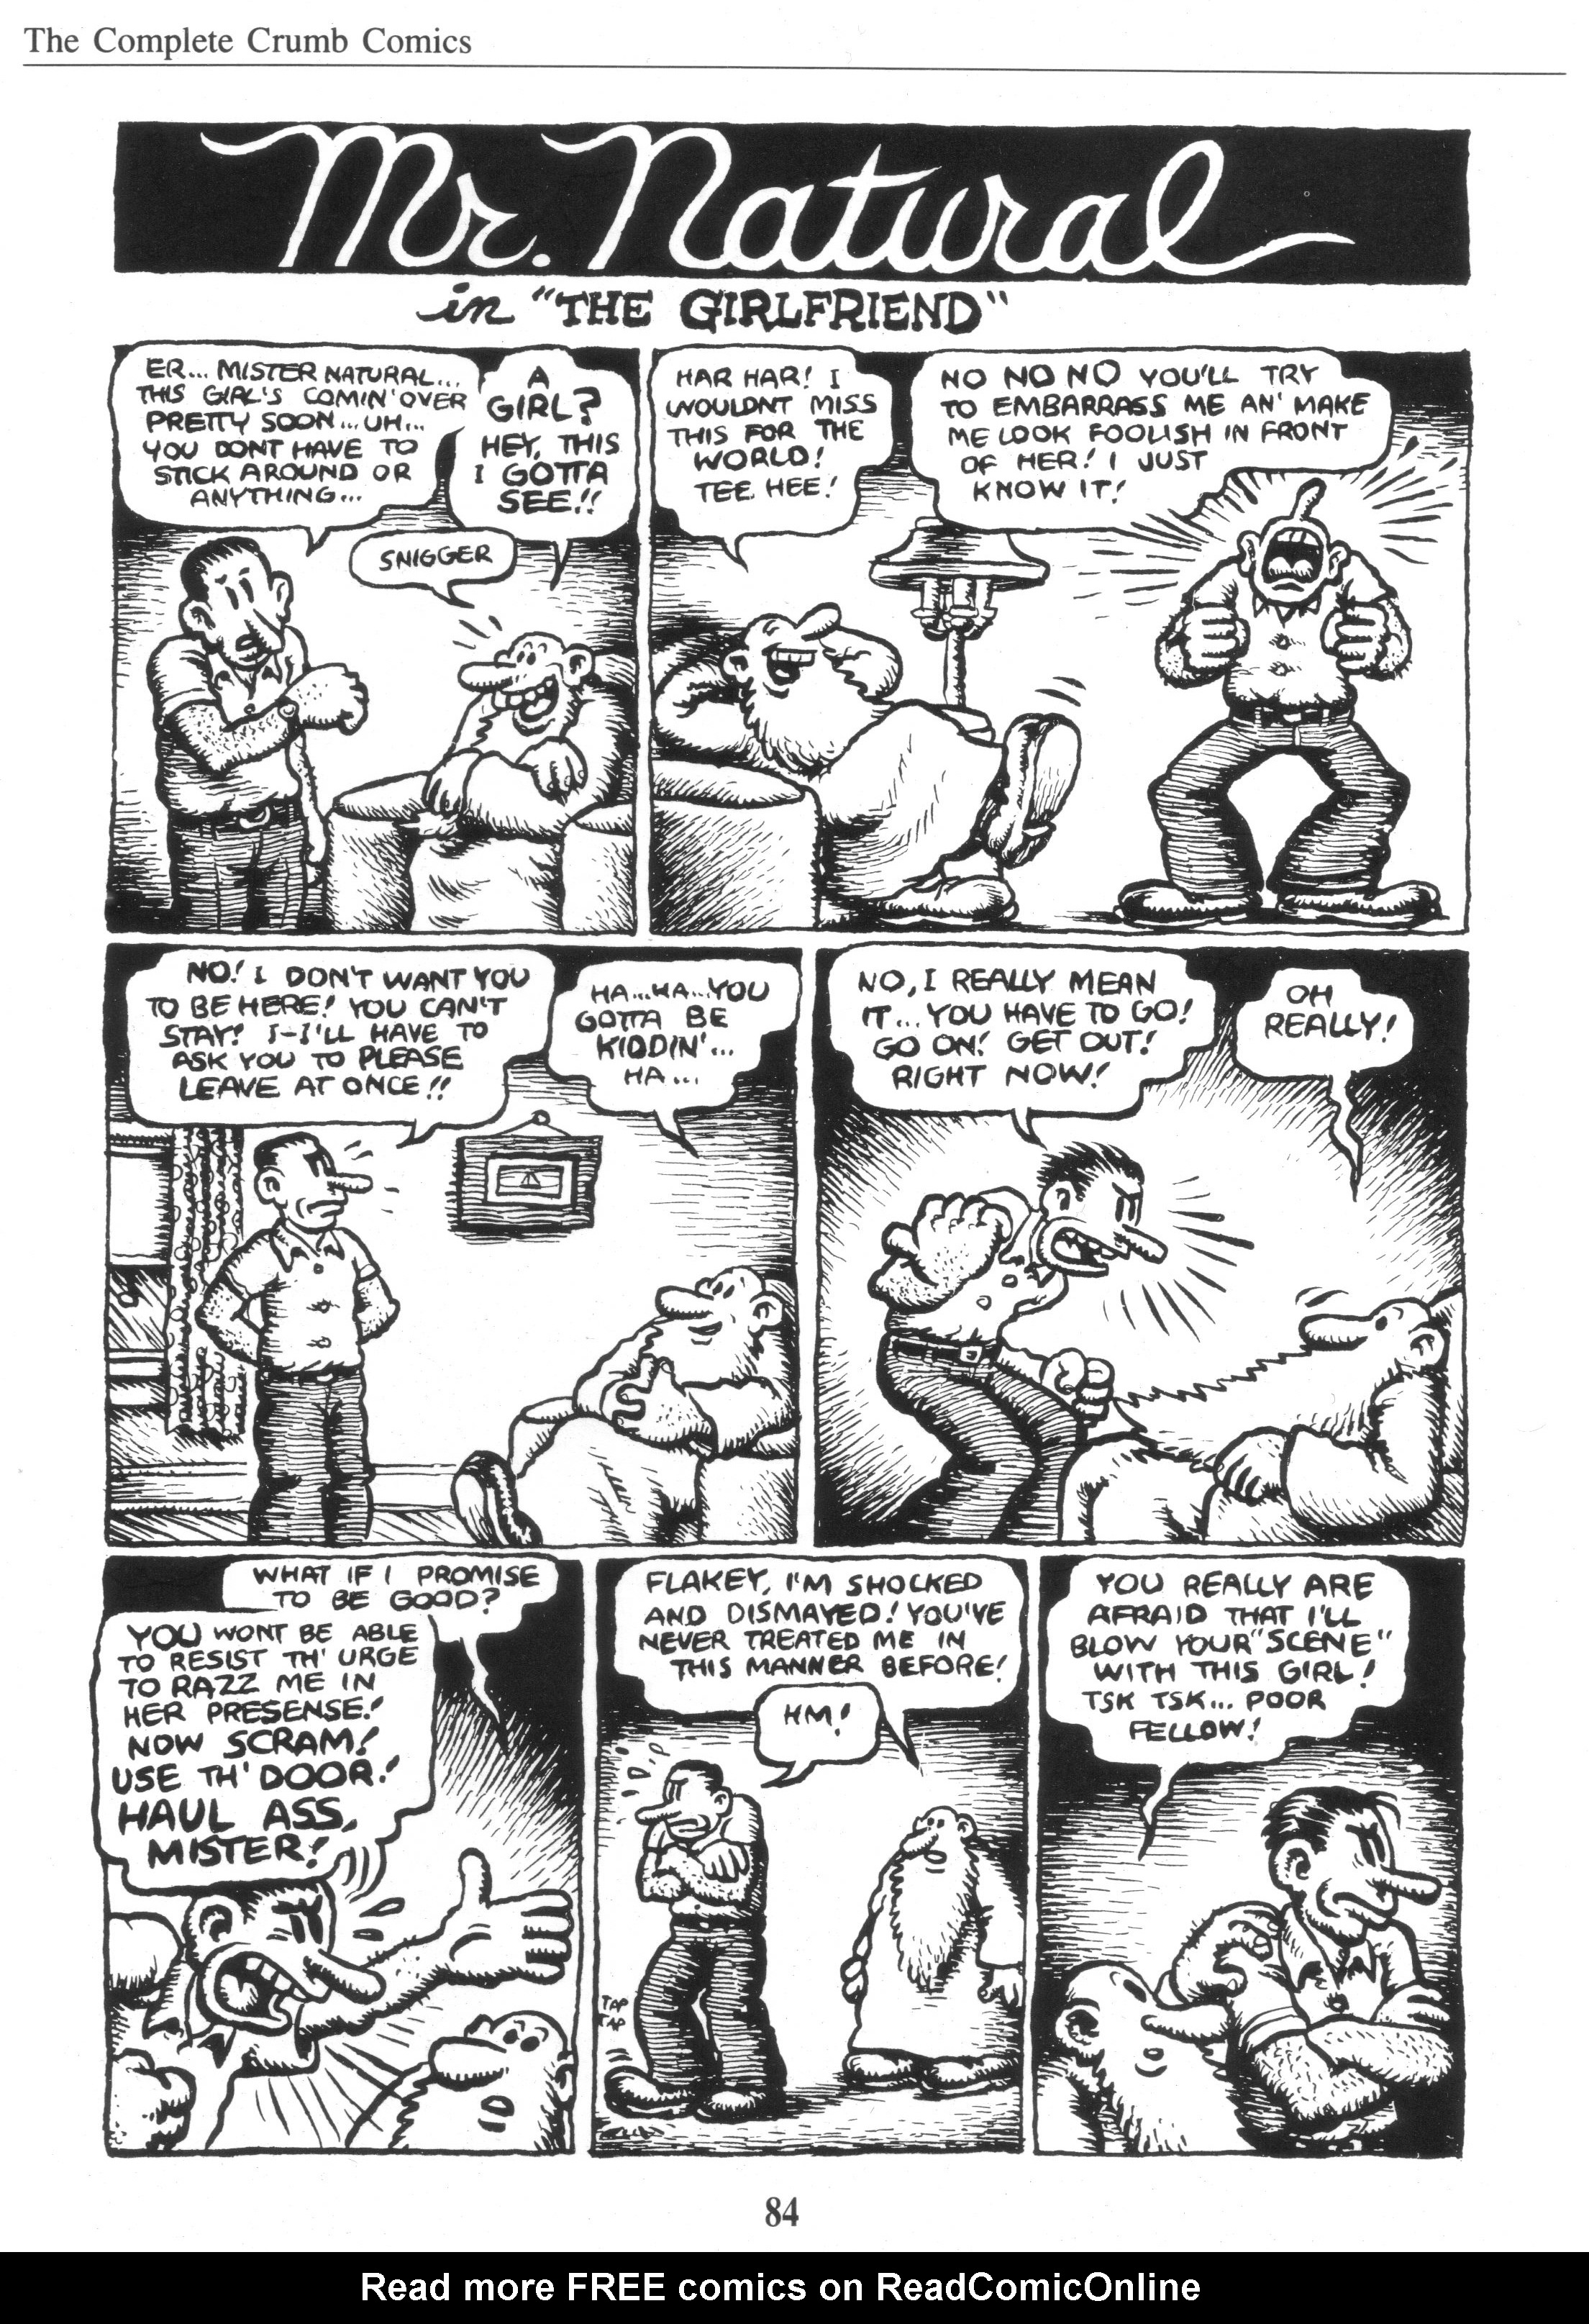 Read online The Complete Crumb Comics comic -  Issue # TPB 8 - 92